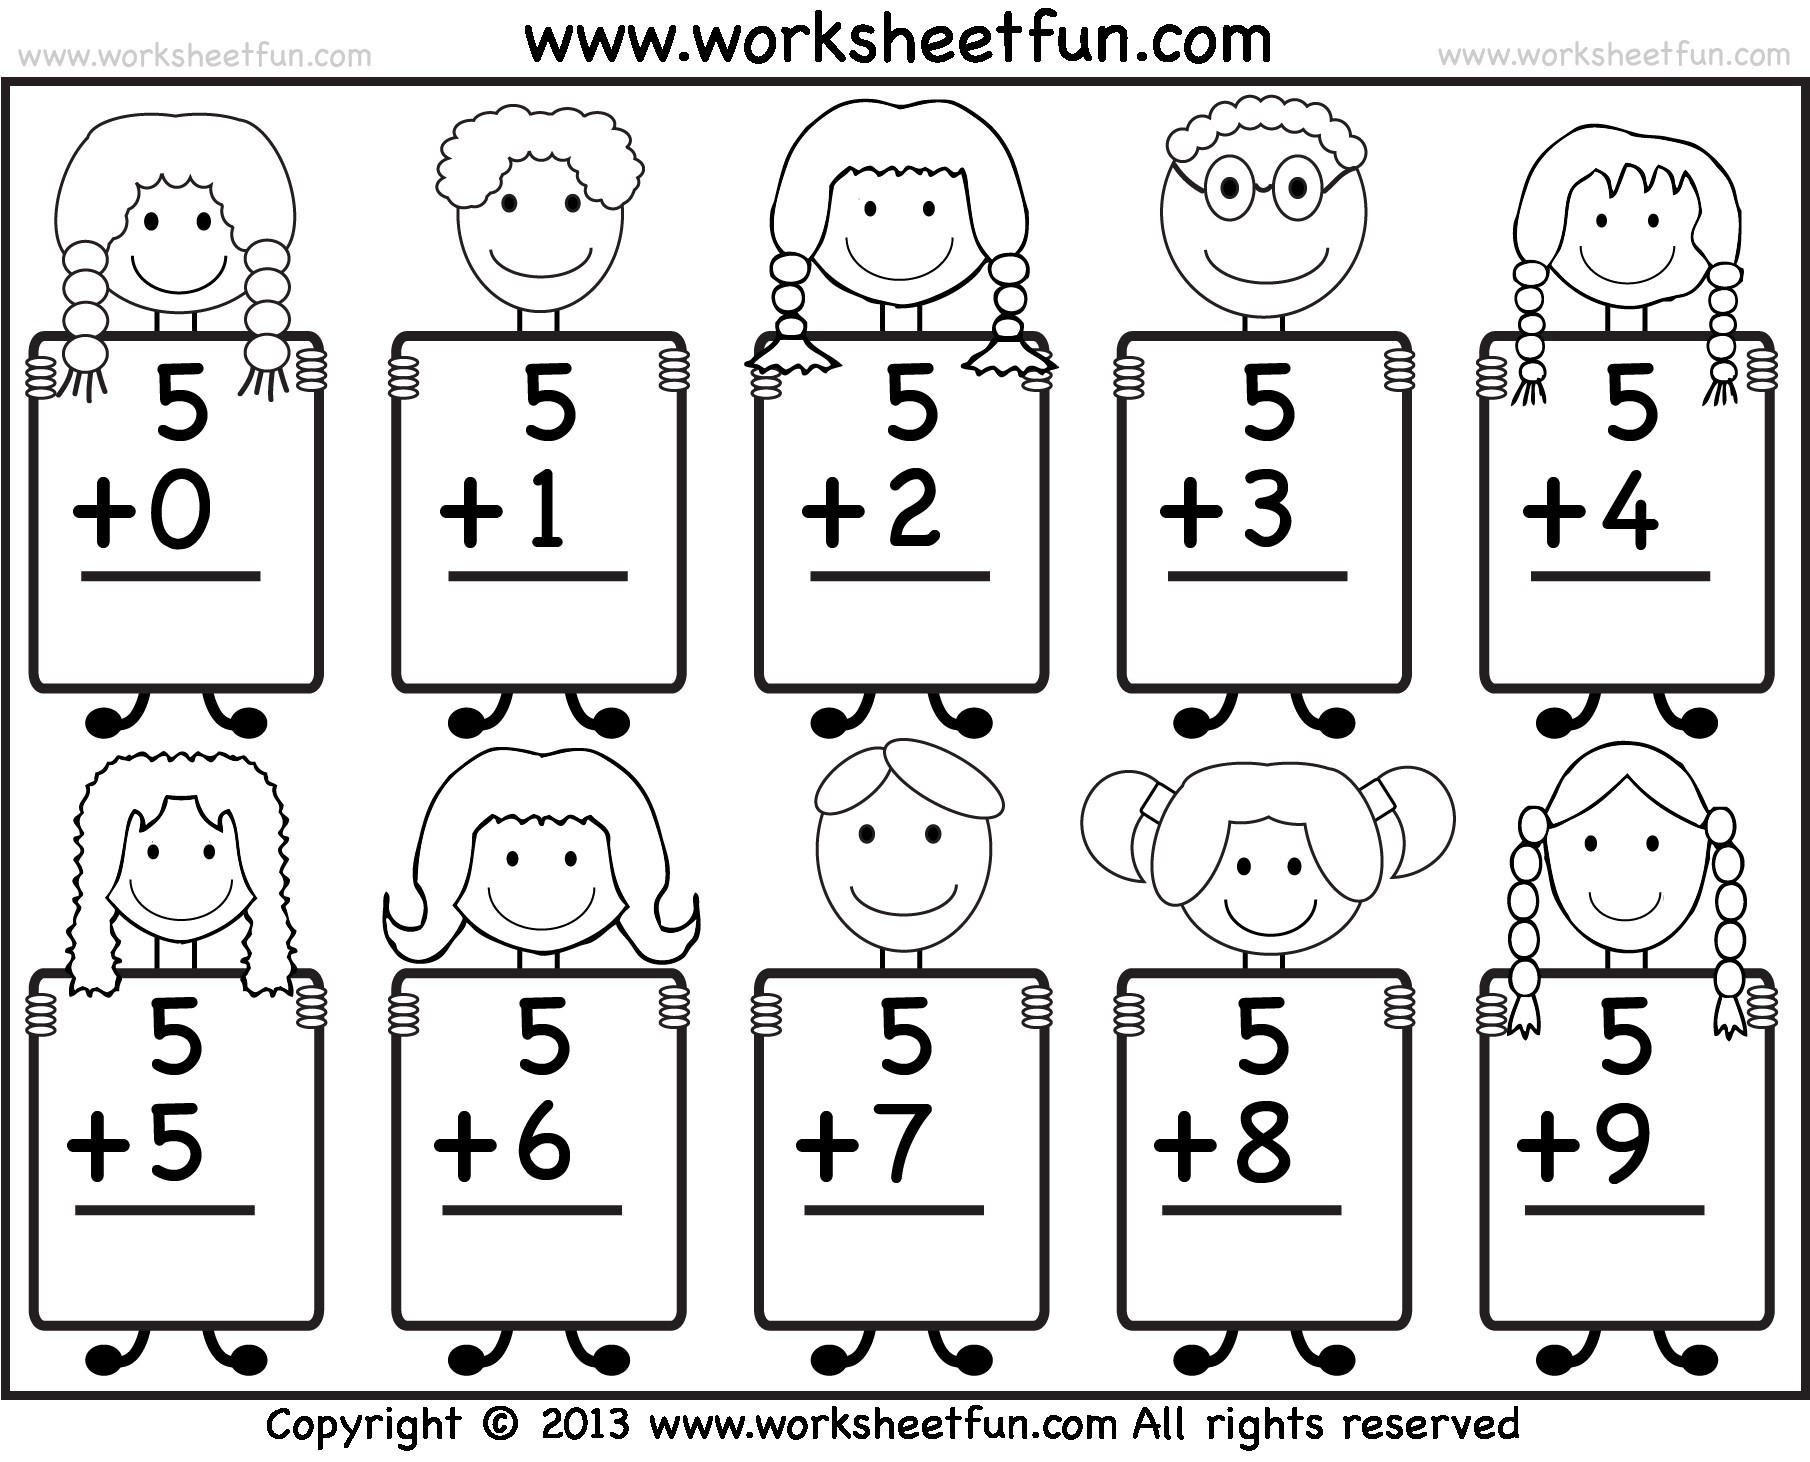 Free Printable Preschool Math Worksheets Download Free | Free - Free Printable Preschool Math Worksheets